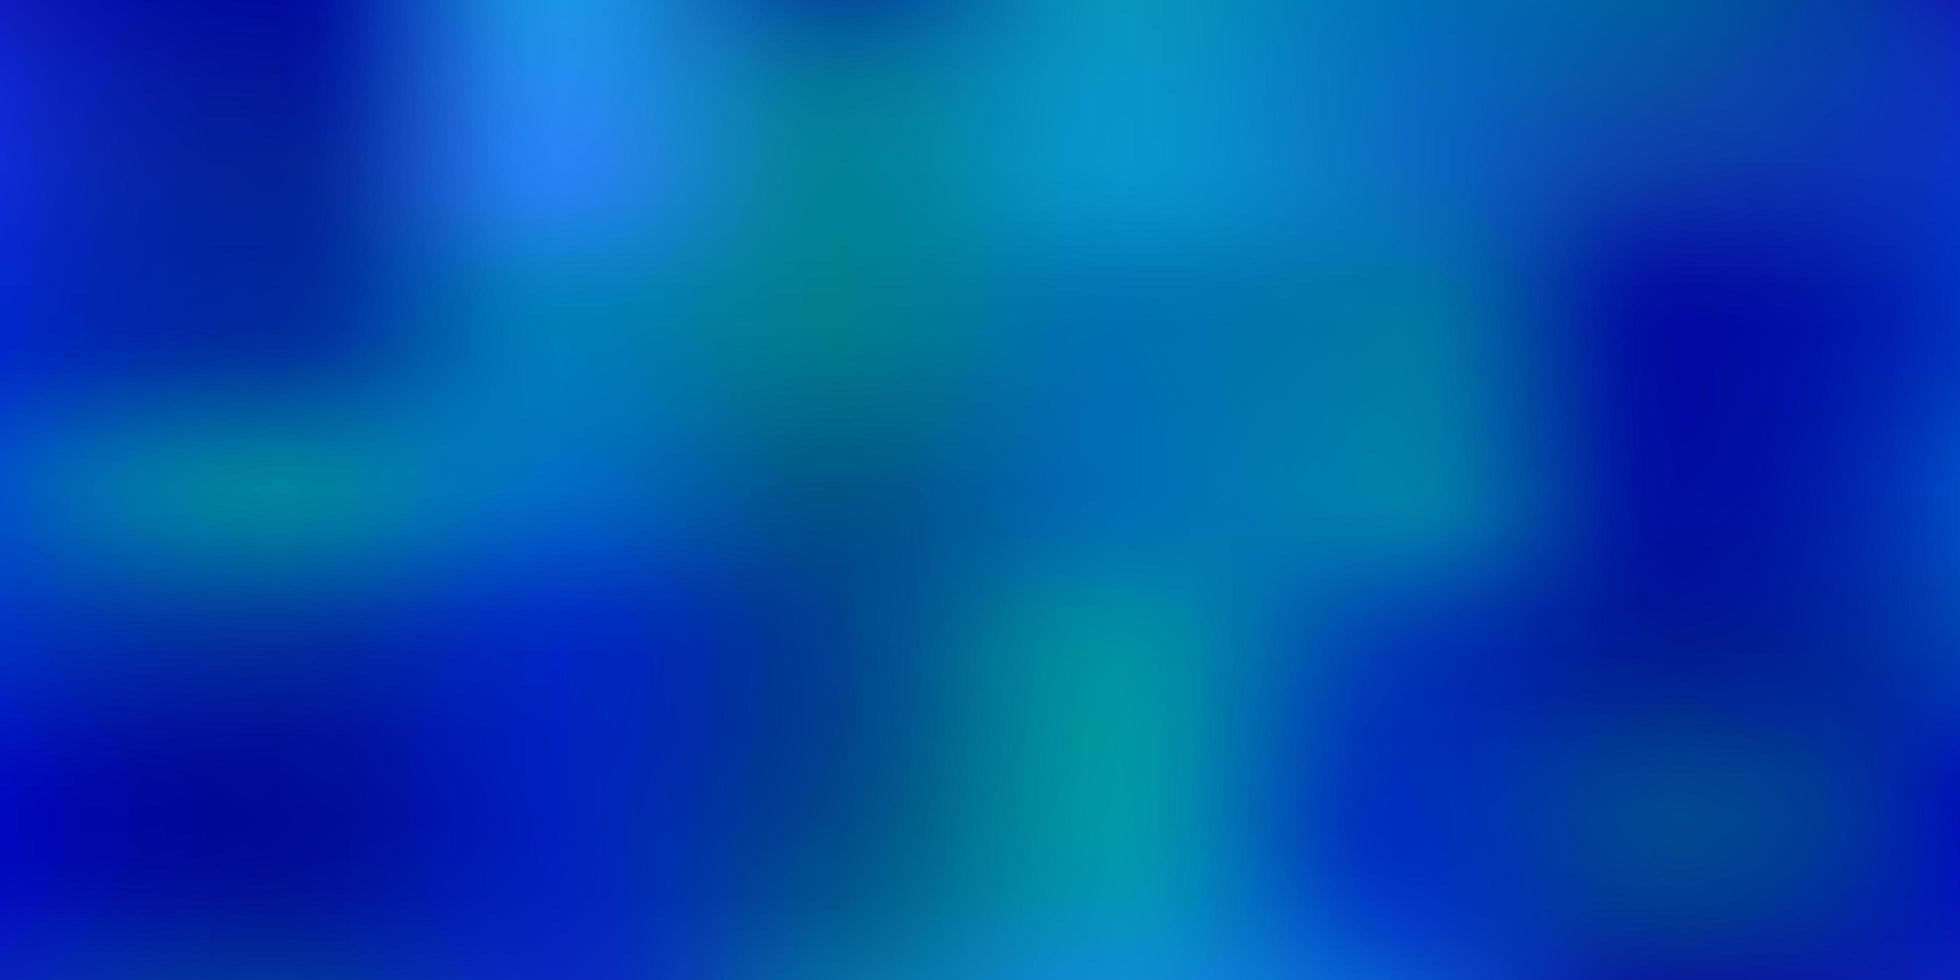 sfondo sfocato sfumato vettoriale blu chiaro